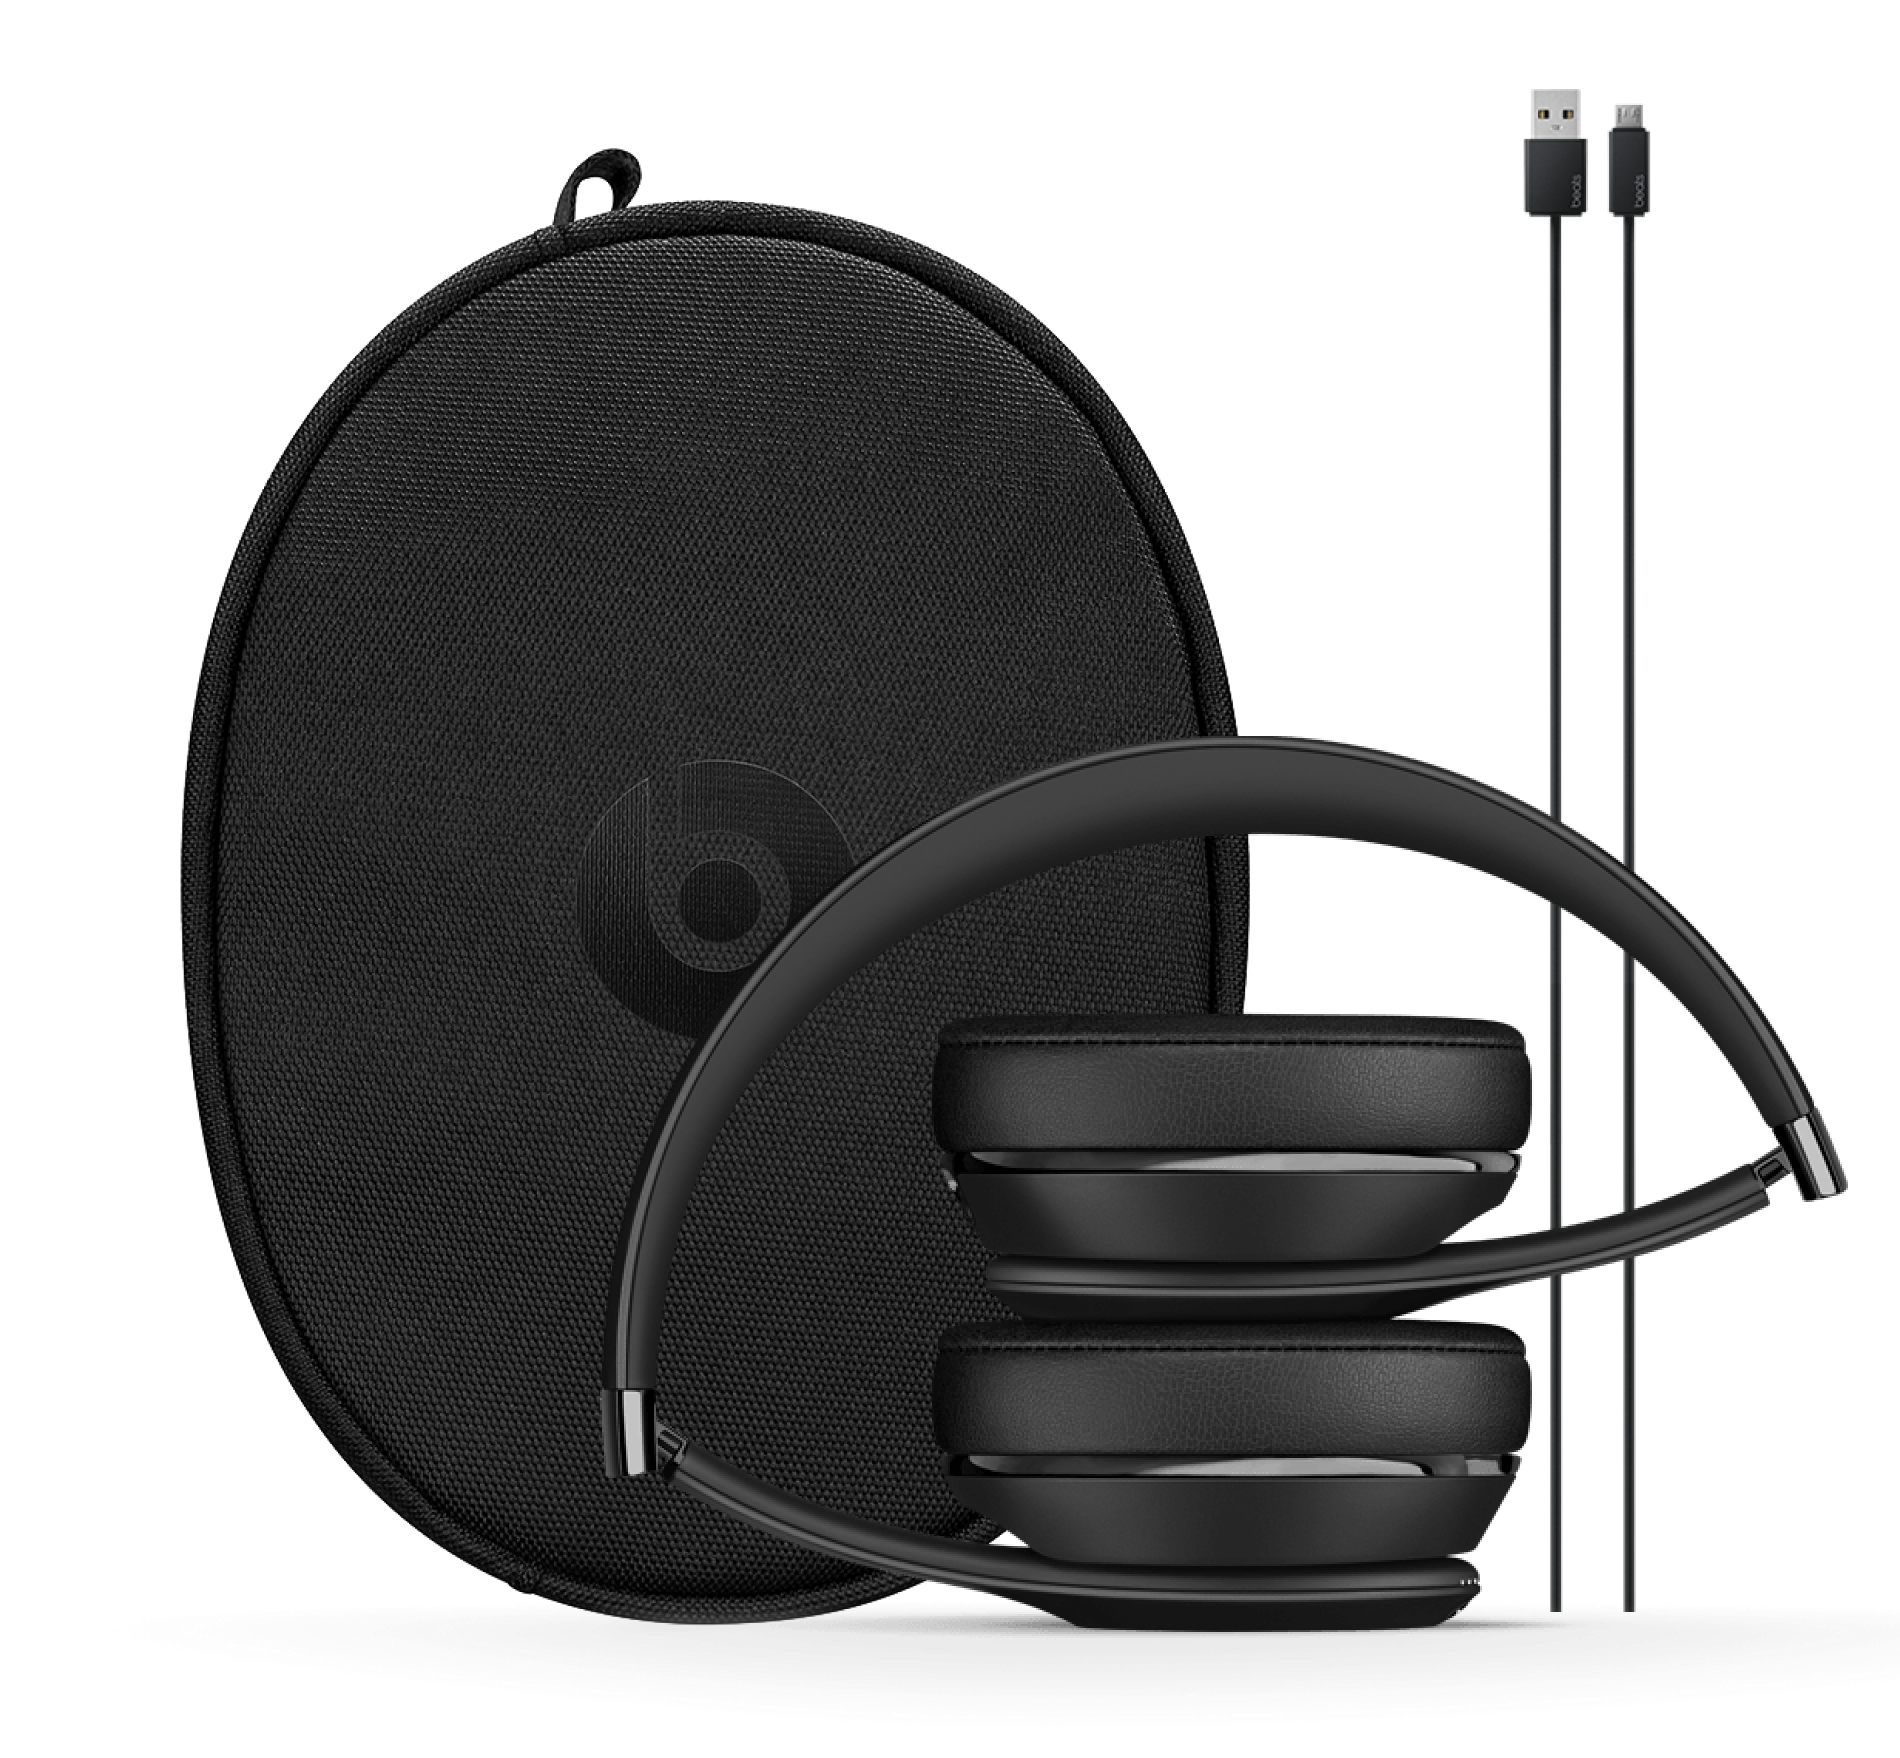 Solo³ Wireless Everyday On-Ear Headphones Beats